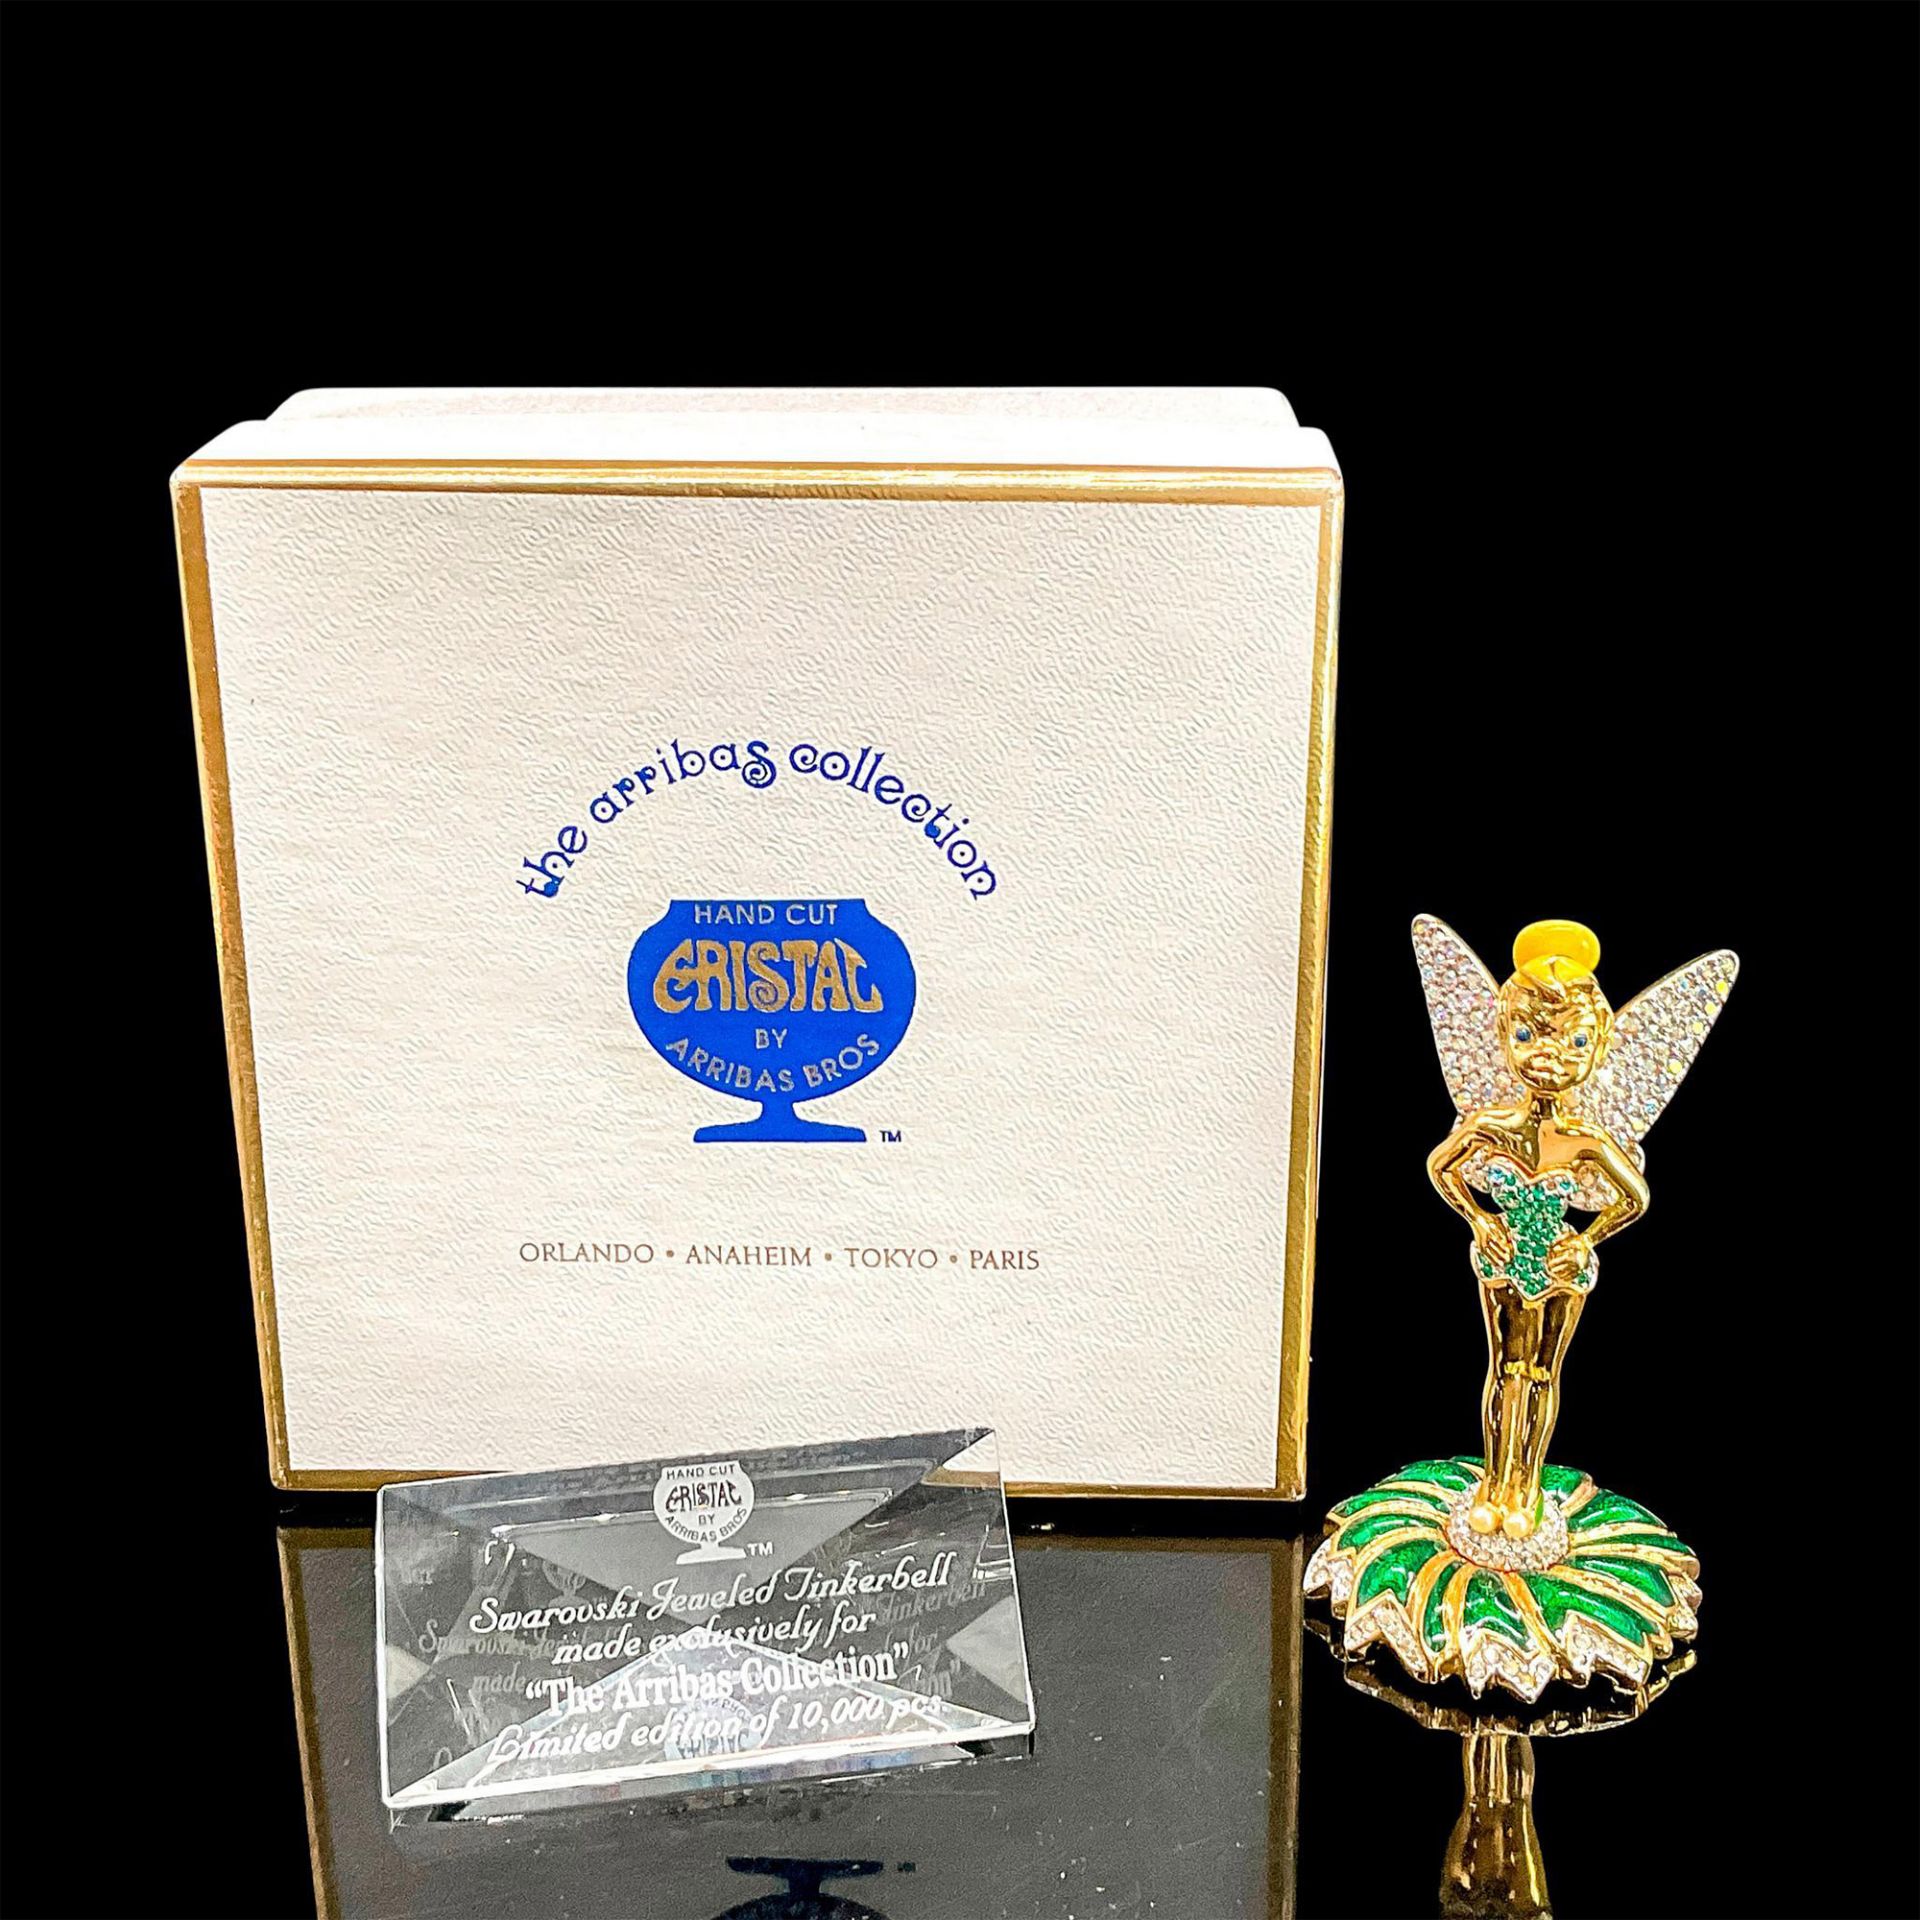 Swarovski Jeweled Tinkerbell and Display Plaque - Image 6 of 6